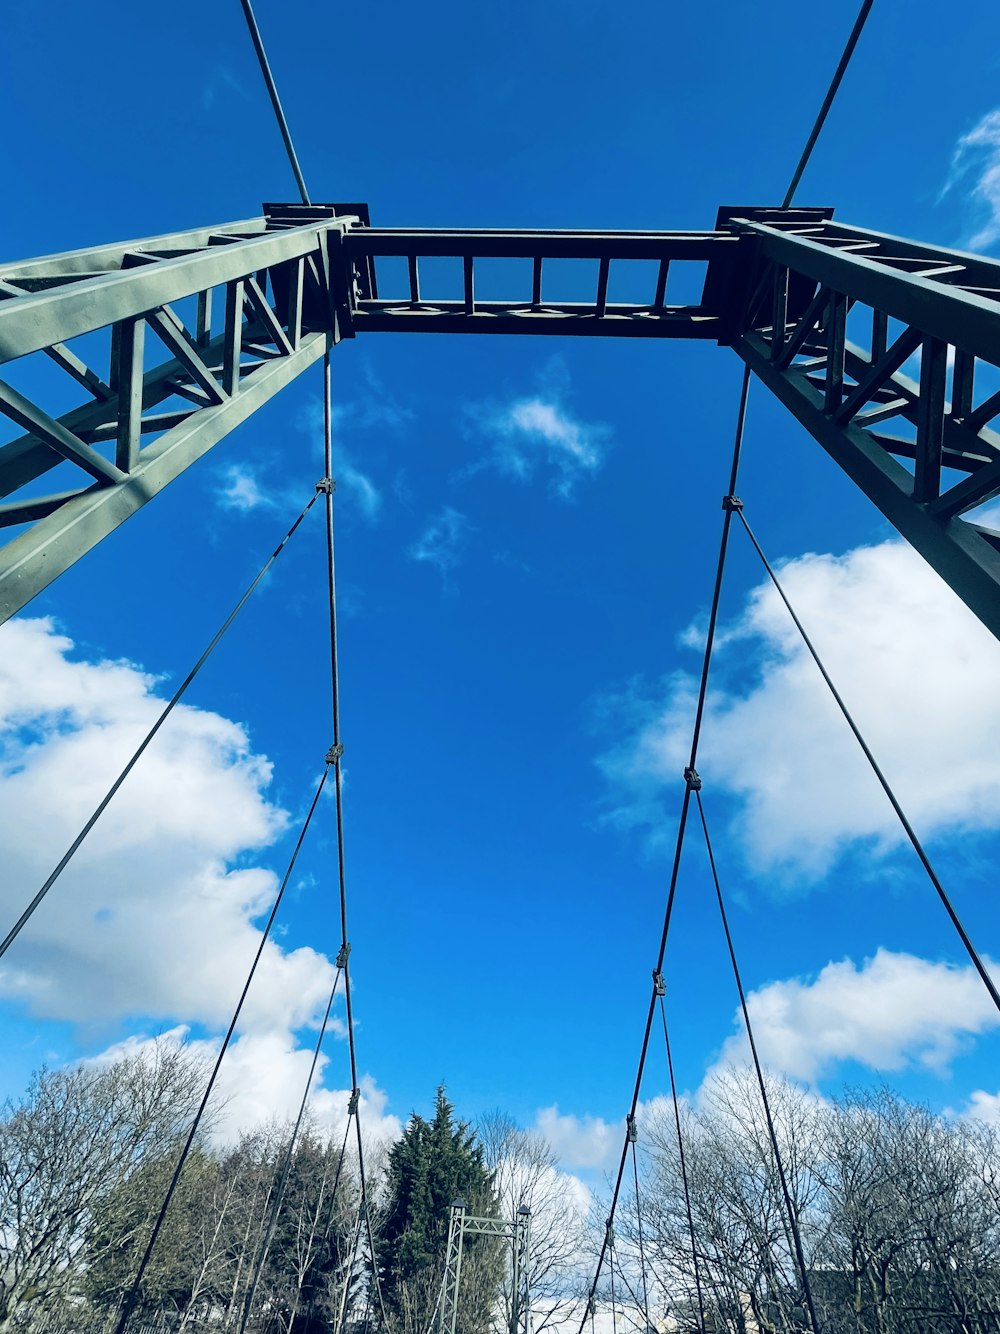 black metal bridge under blue sky during daytime